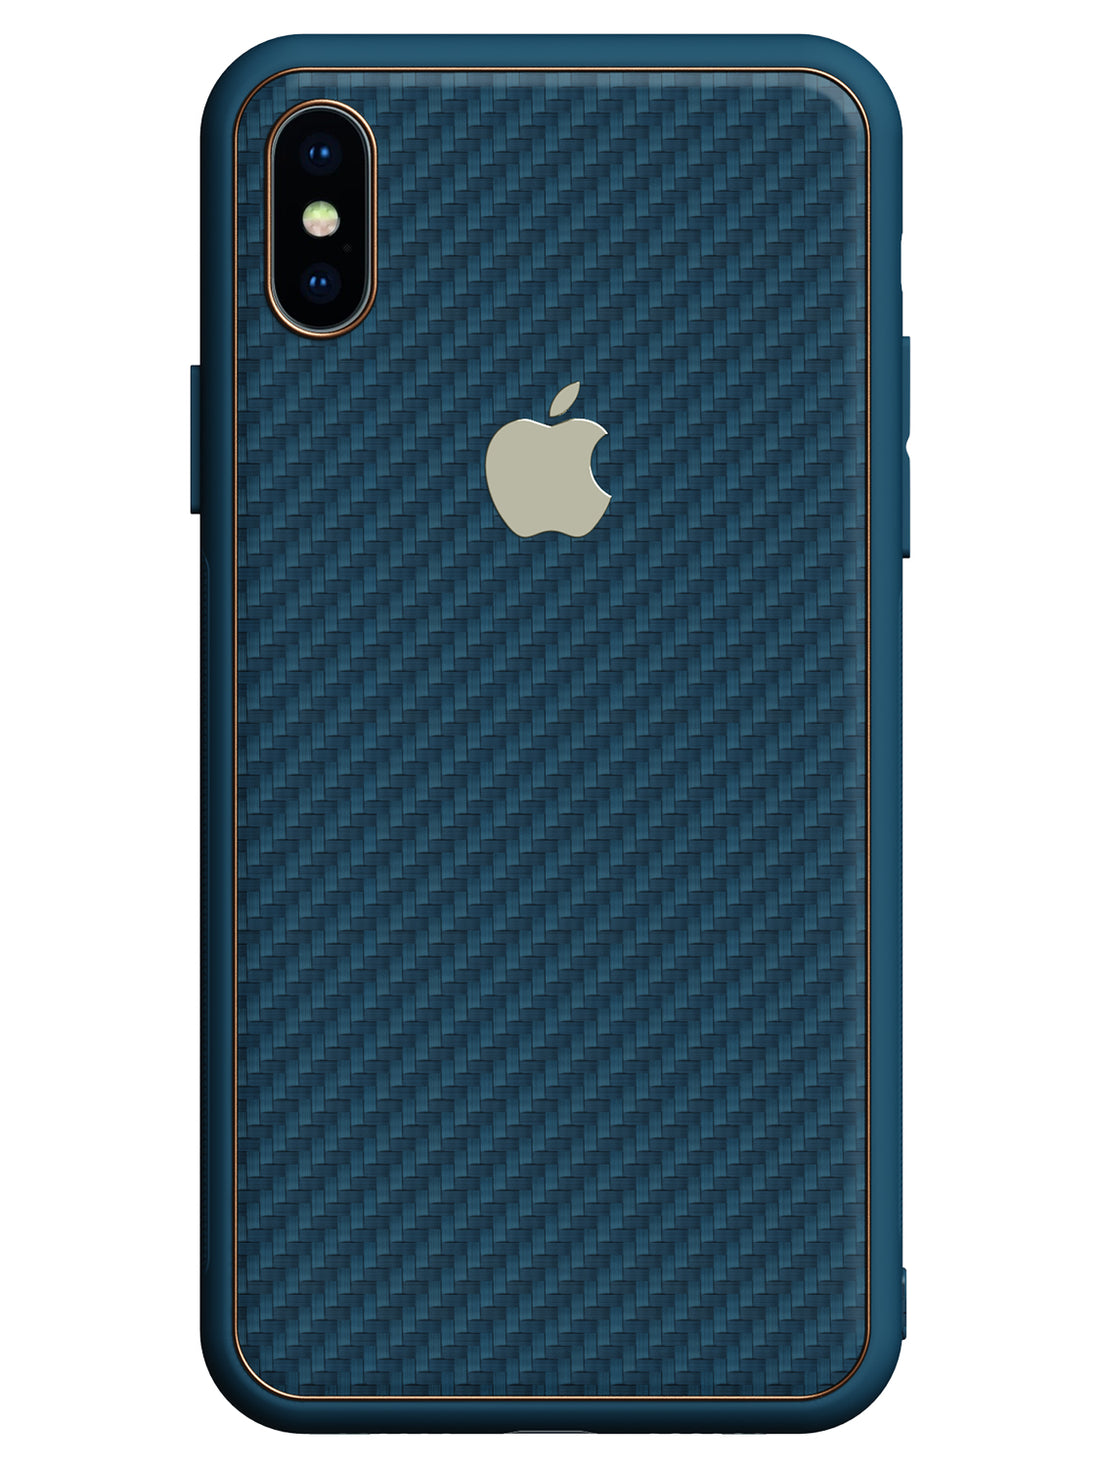 Carbon Leather Chrome Case - iPhone X/XS (Navy Blue)